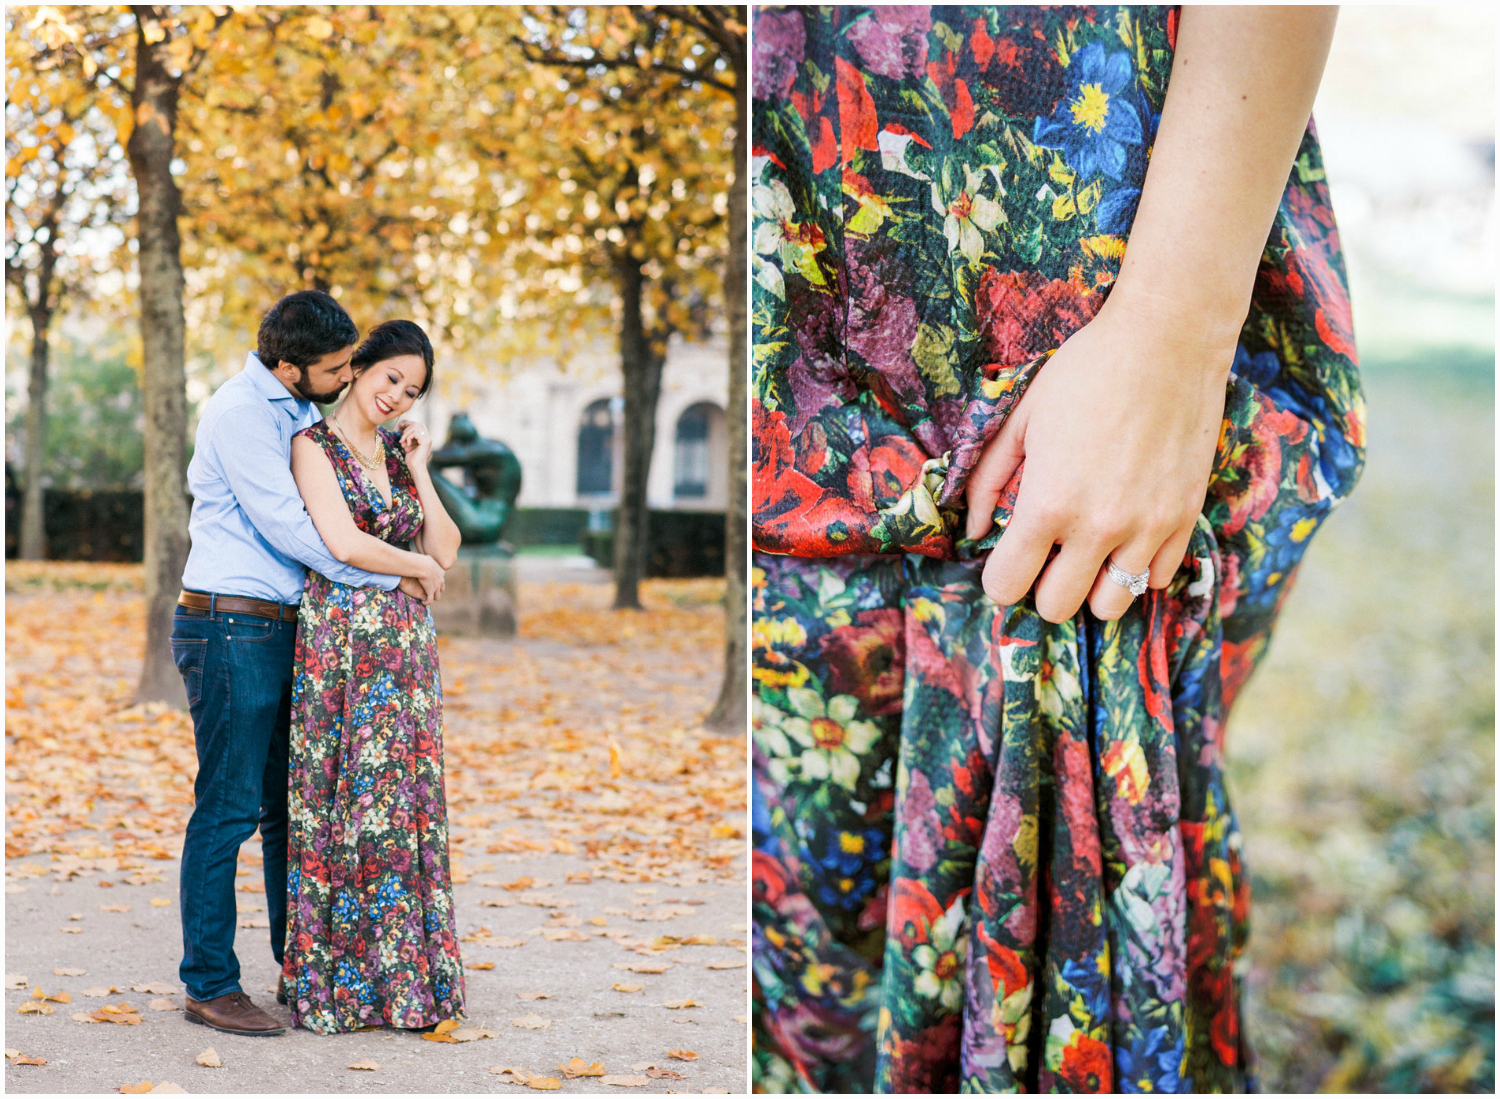 Floral dress for engagement photos